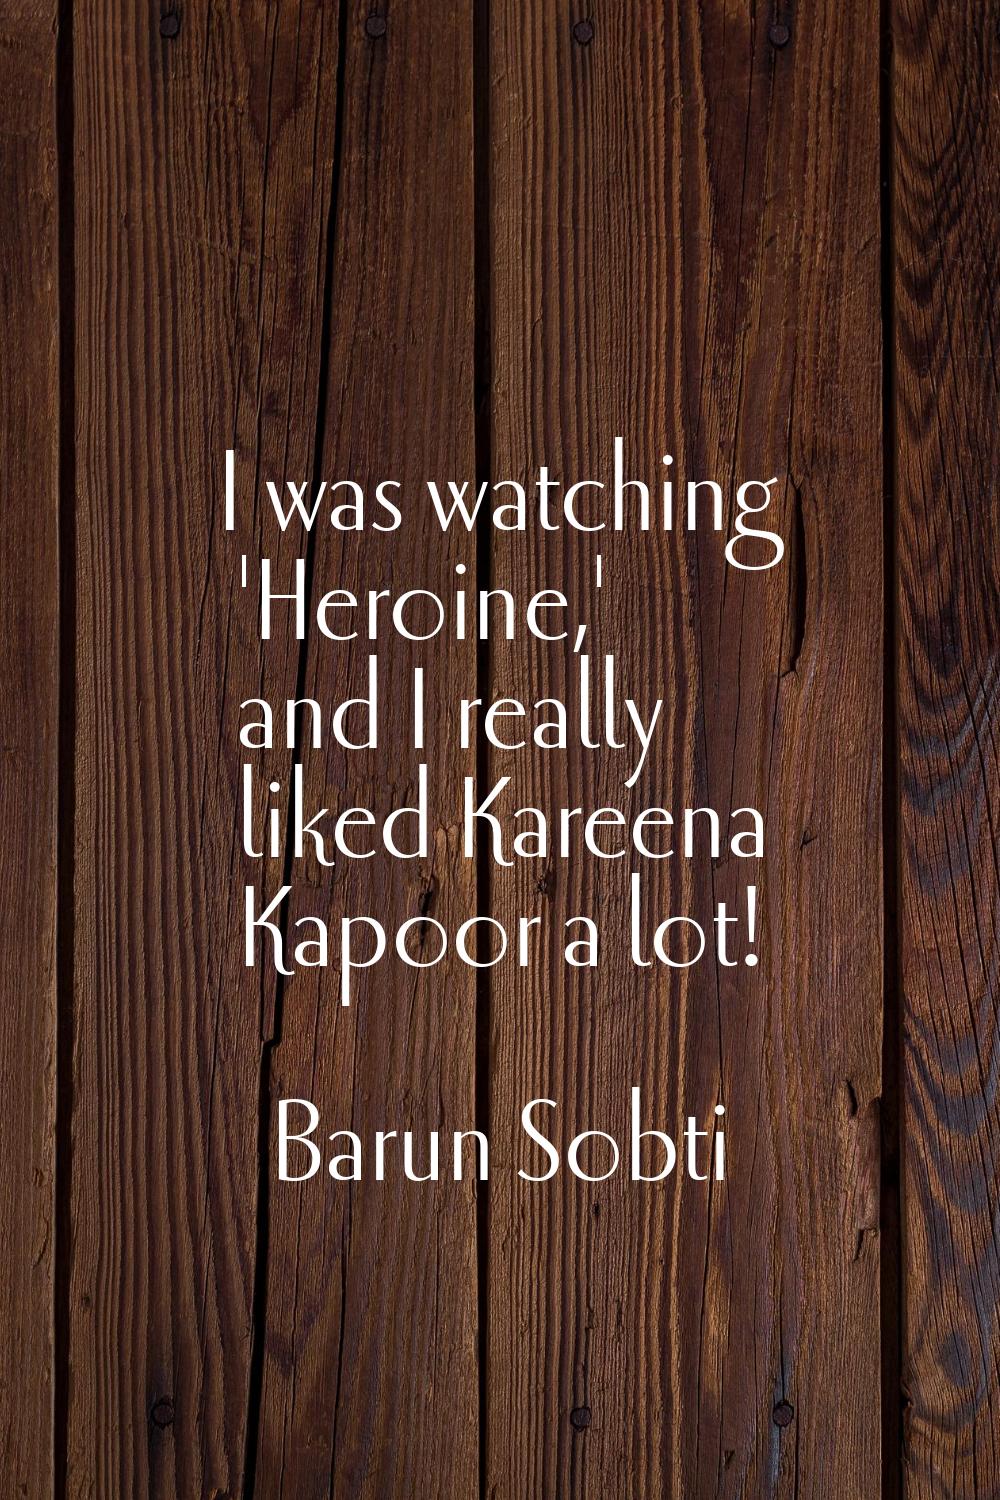 I was watching 'Heroine,' and I really liked Kareena Kapoor a lot!